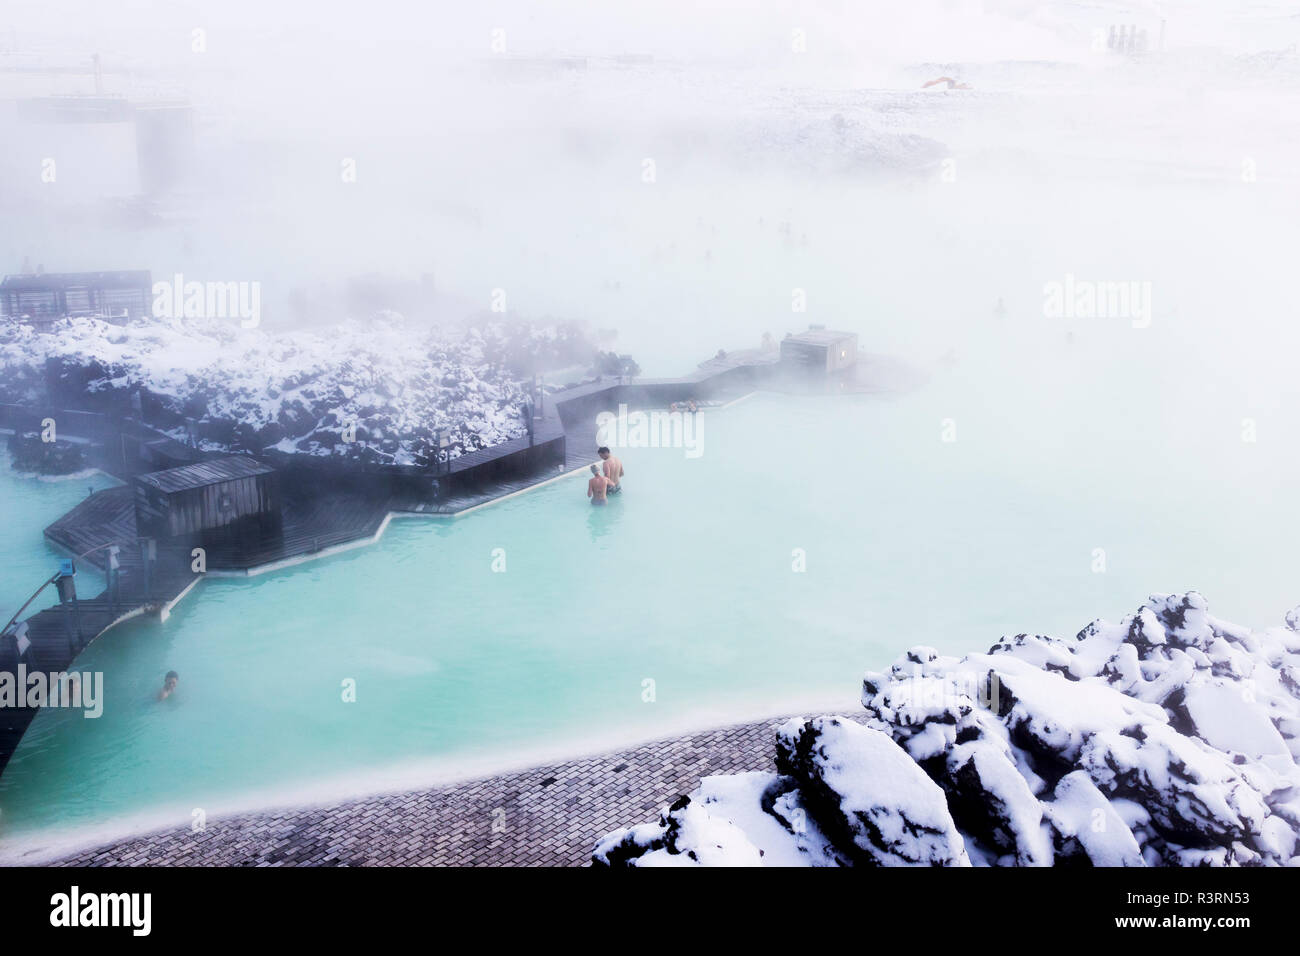 Europe, Iceland, Reykjanes Peninsula, Between Keflavik and Grindavik, Blue Lagoon. People bathing in the waters of the Blue Lagoon Spa. Stock Photo